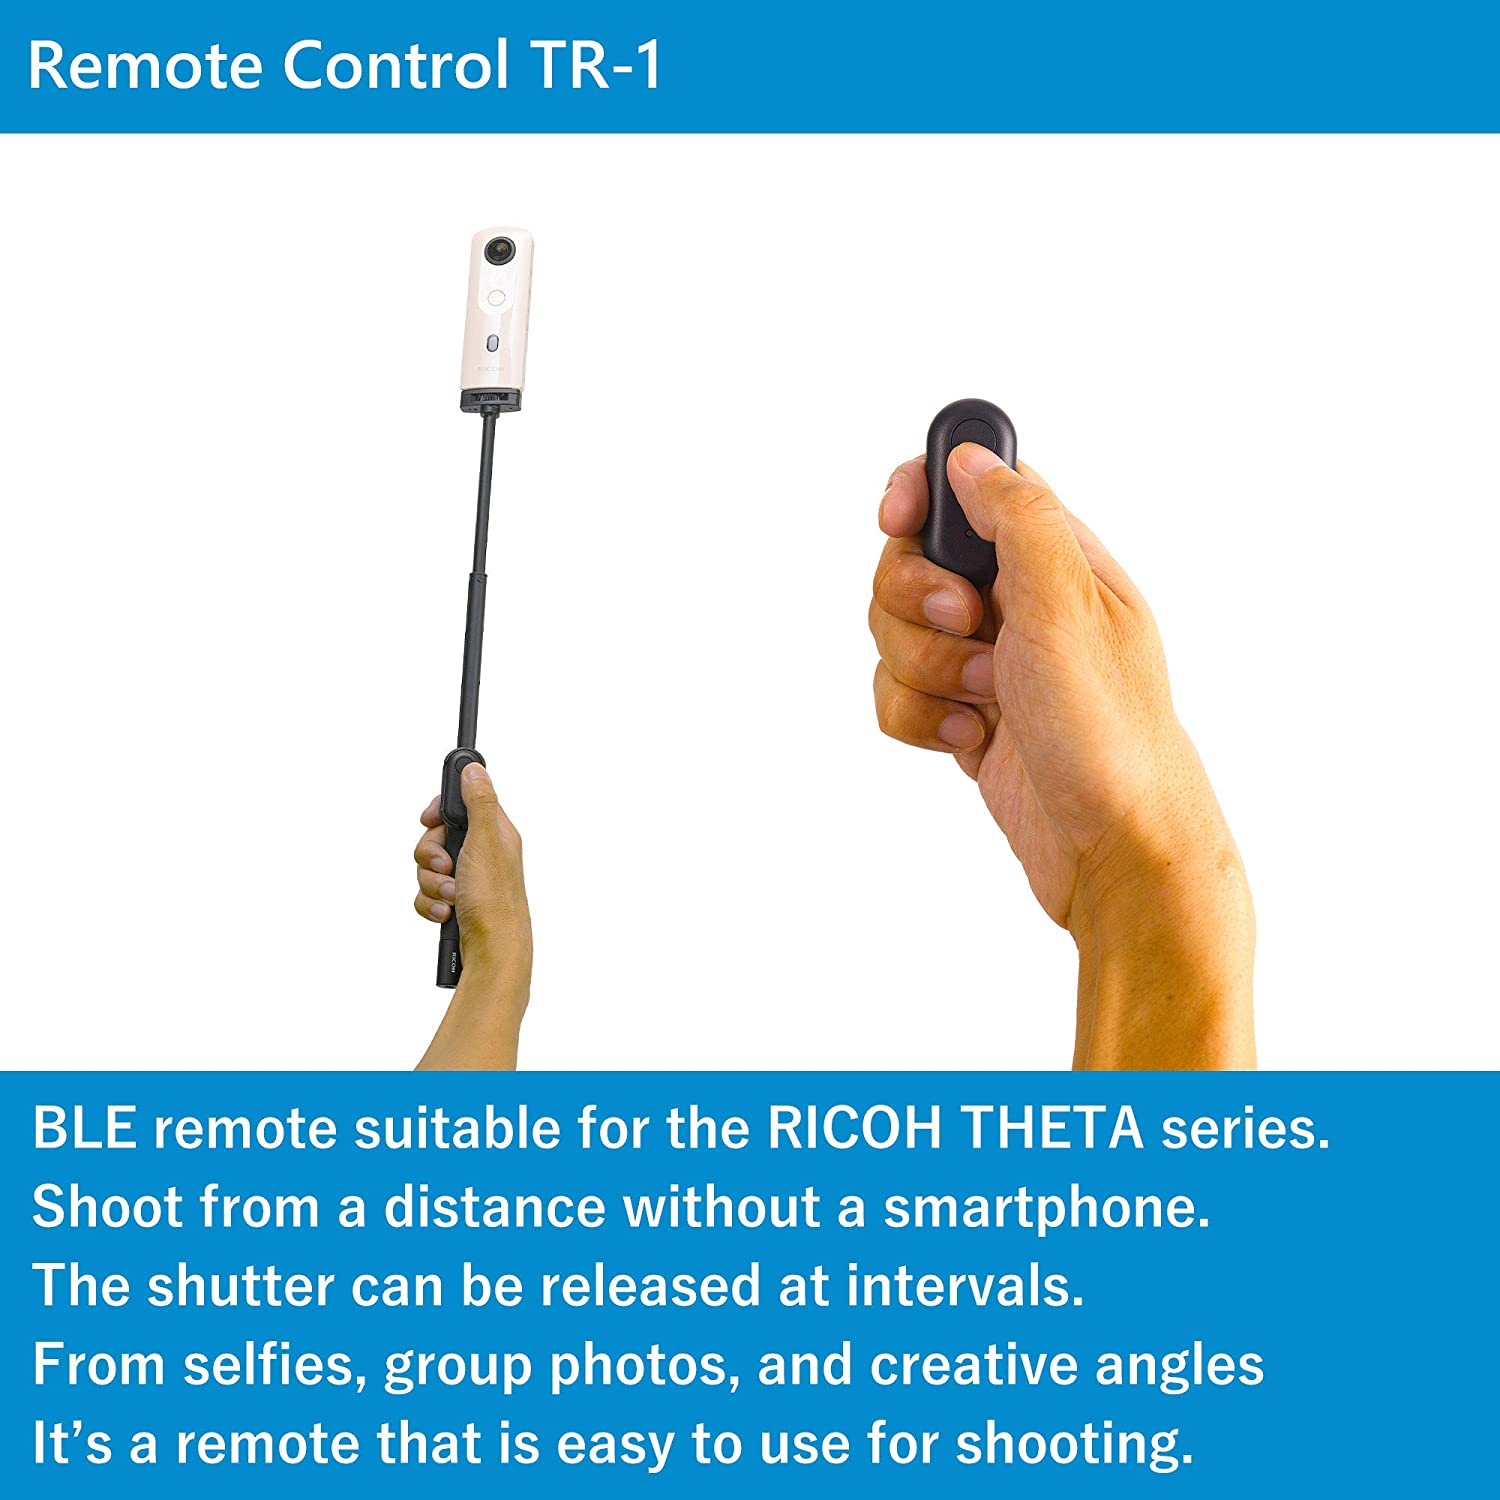 RICOH THETA - Remote Control TR-1